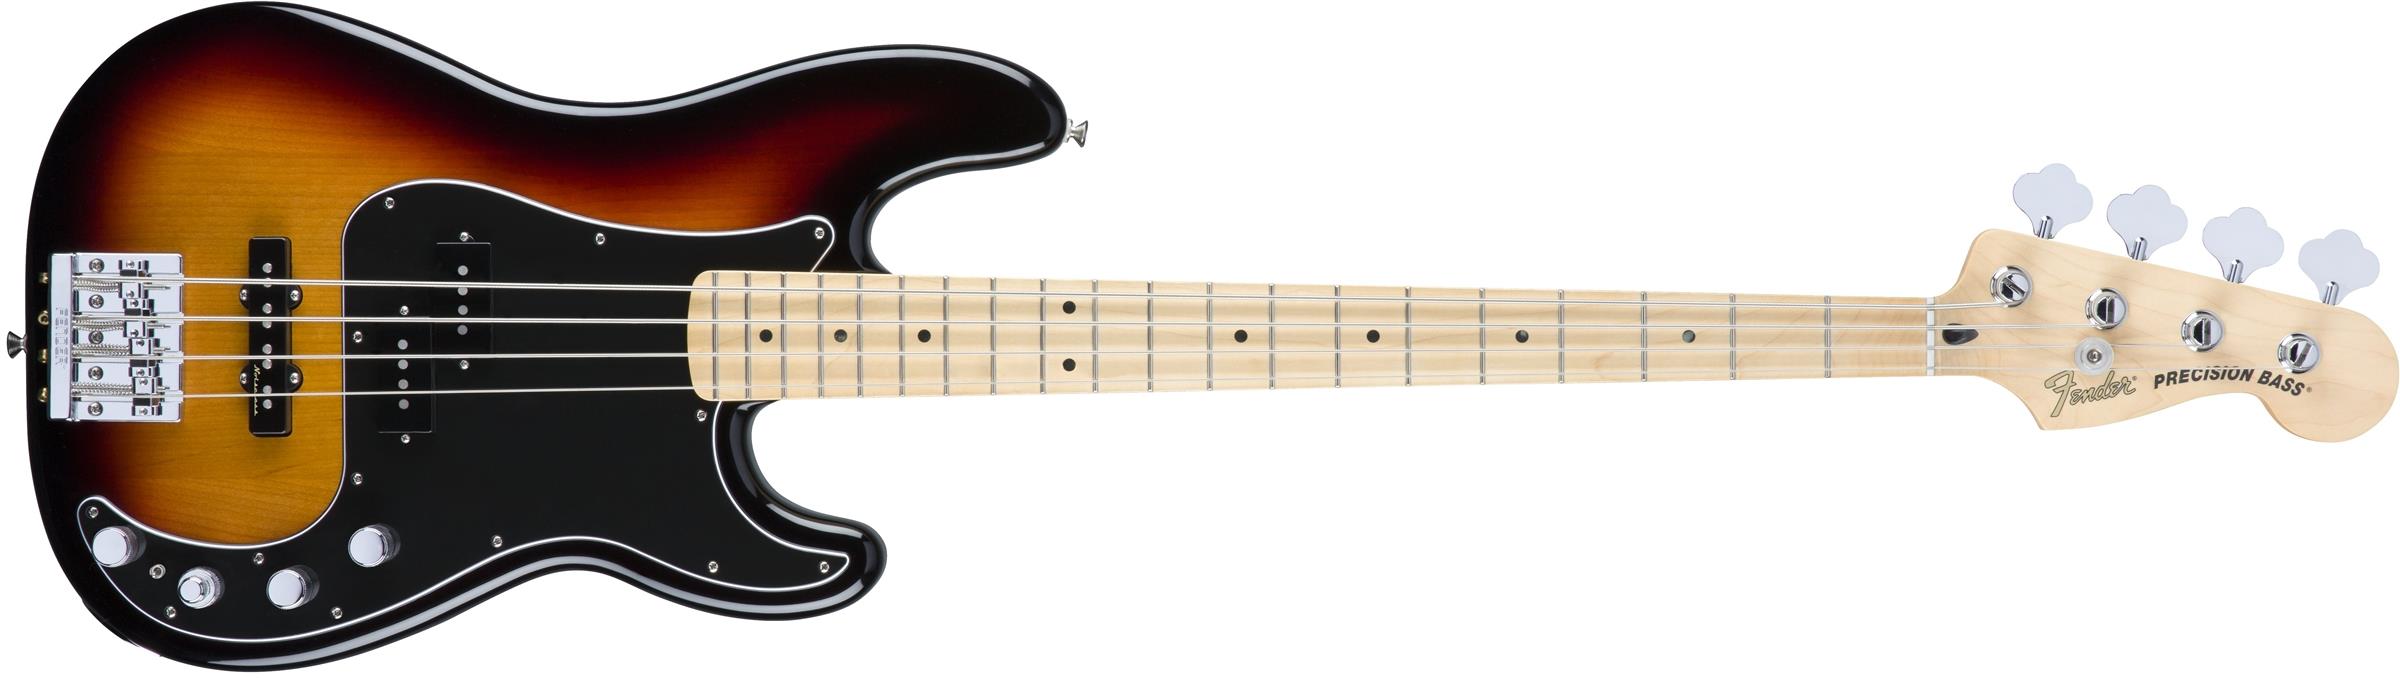 Fender Deluxe Active Precision Bass Main